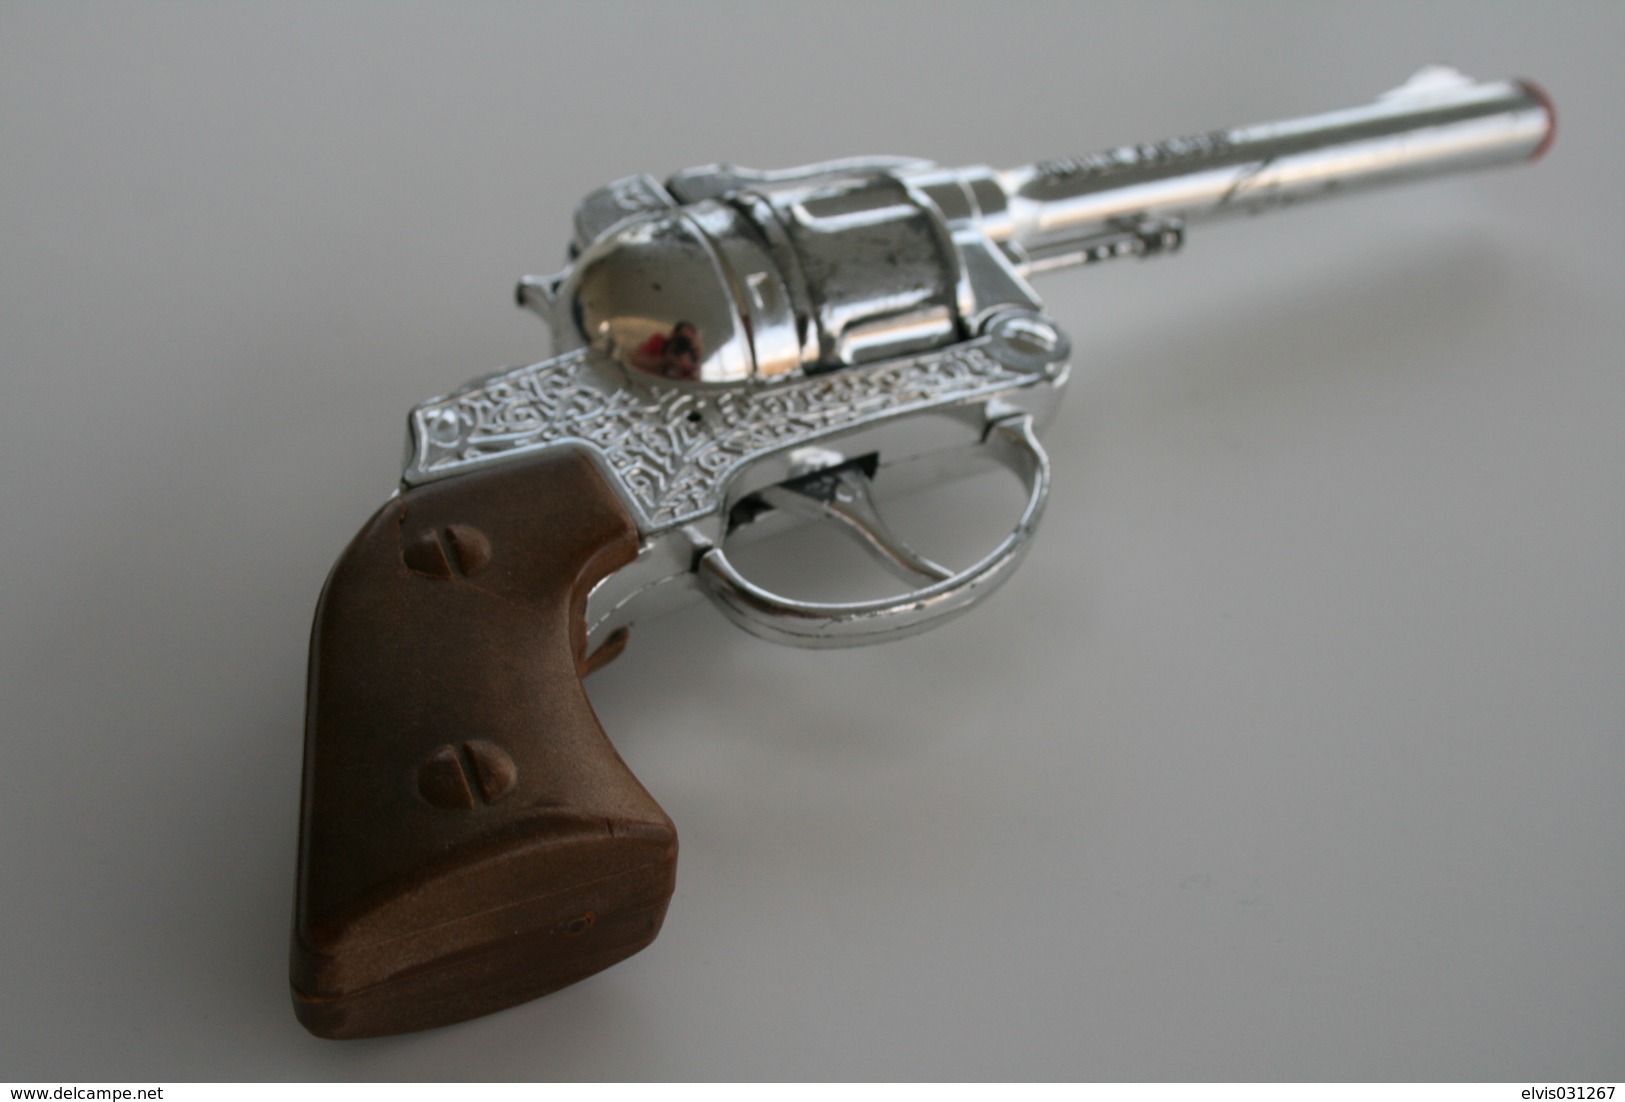 Vintage TOY GUN : LONE STAR SUPER COWBOY - L=16cm - 19??s - keywords : Cap Gun - Cork gun - Rifle - Revolver - Pistol